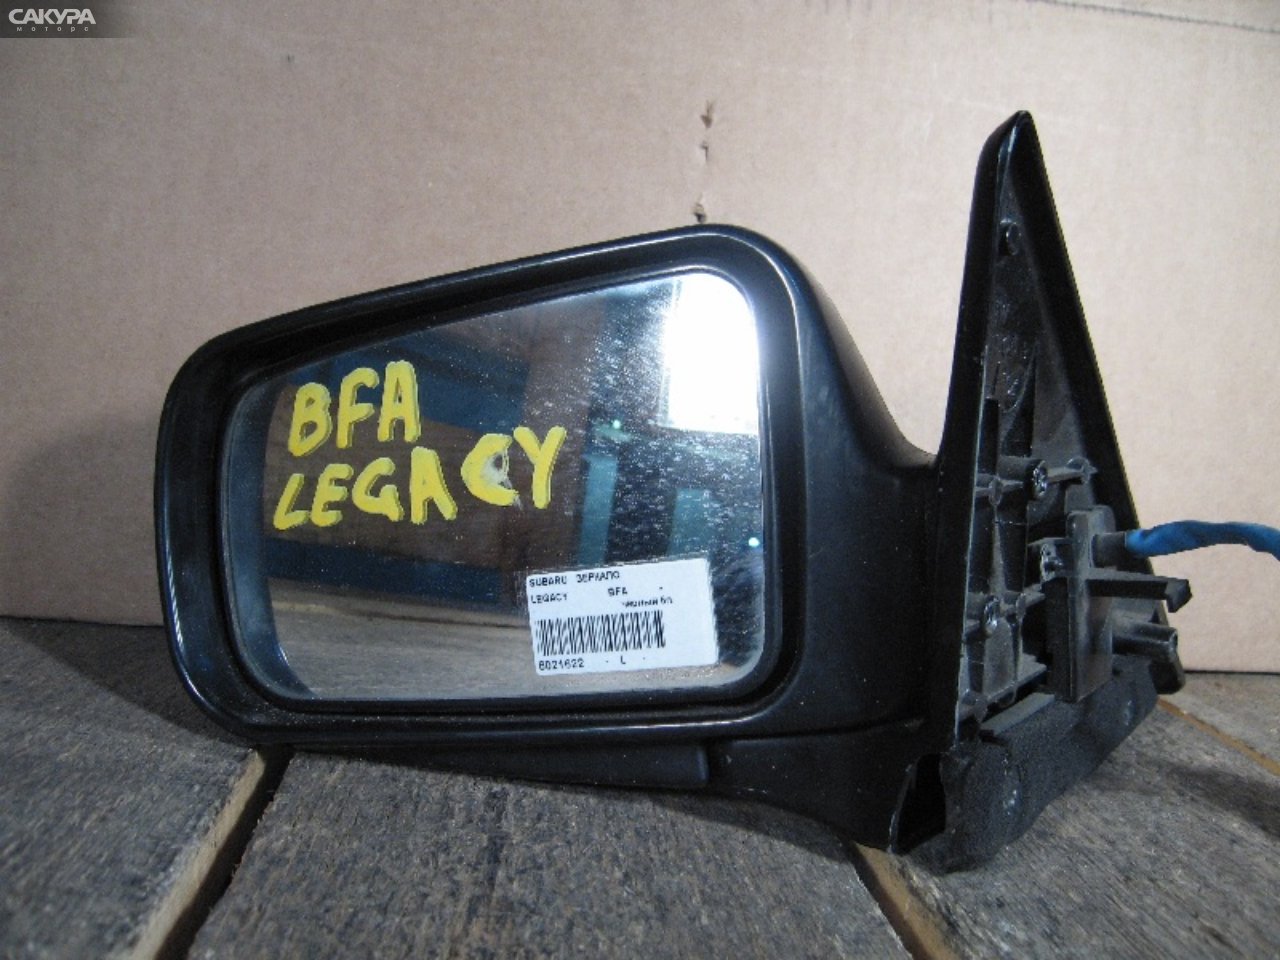 Зеркало боковое левое Subaru Legacy BFA: купить в Сакура Абакан.